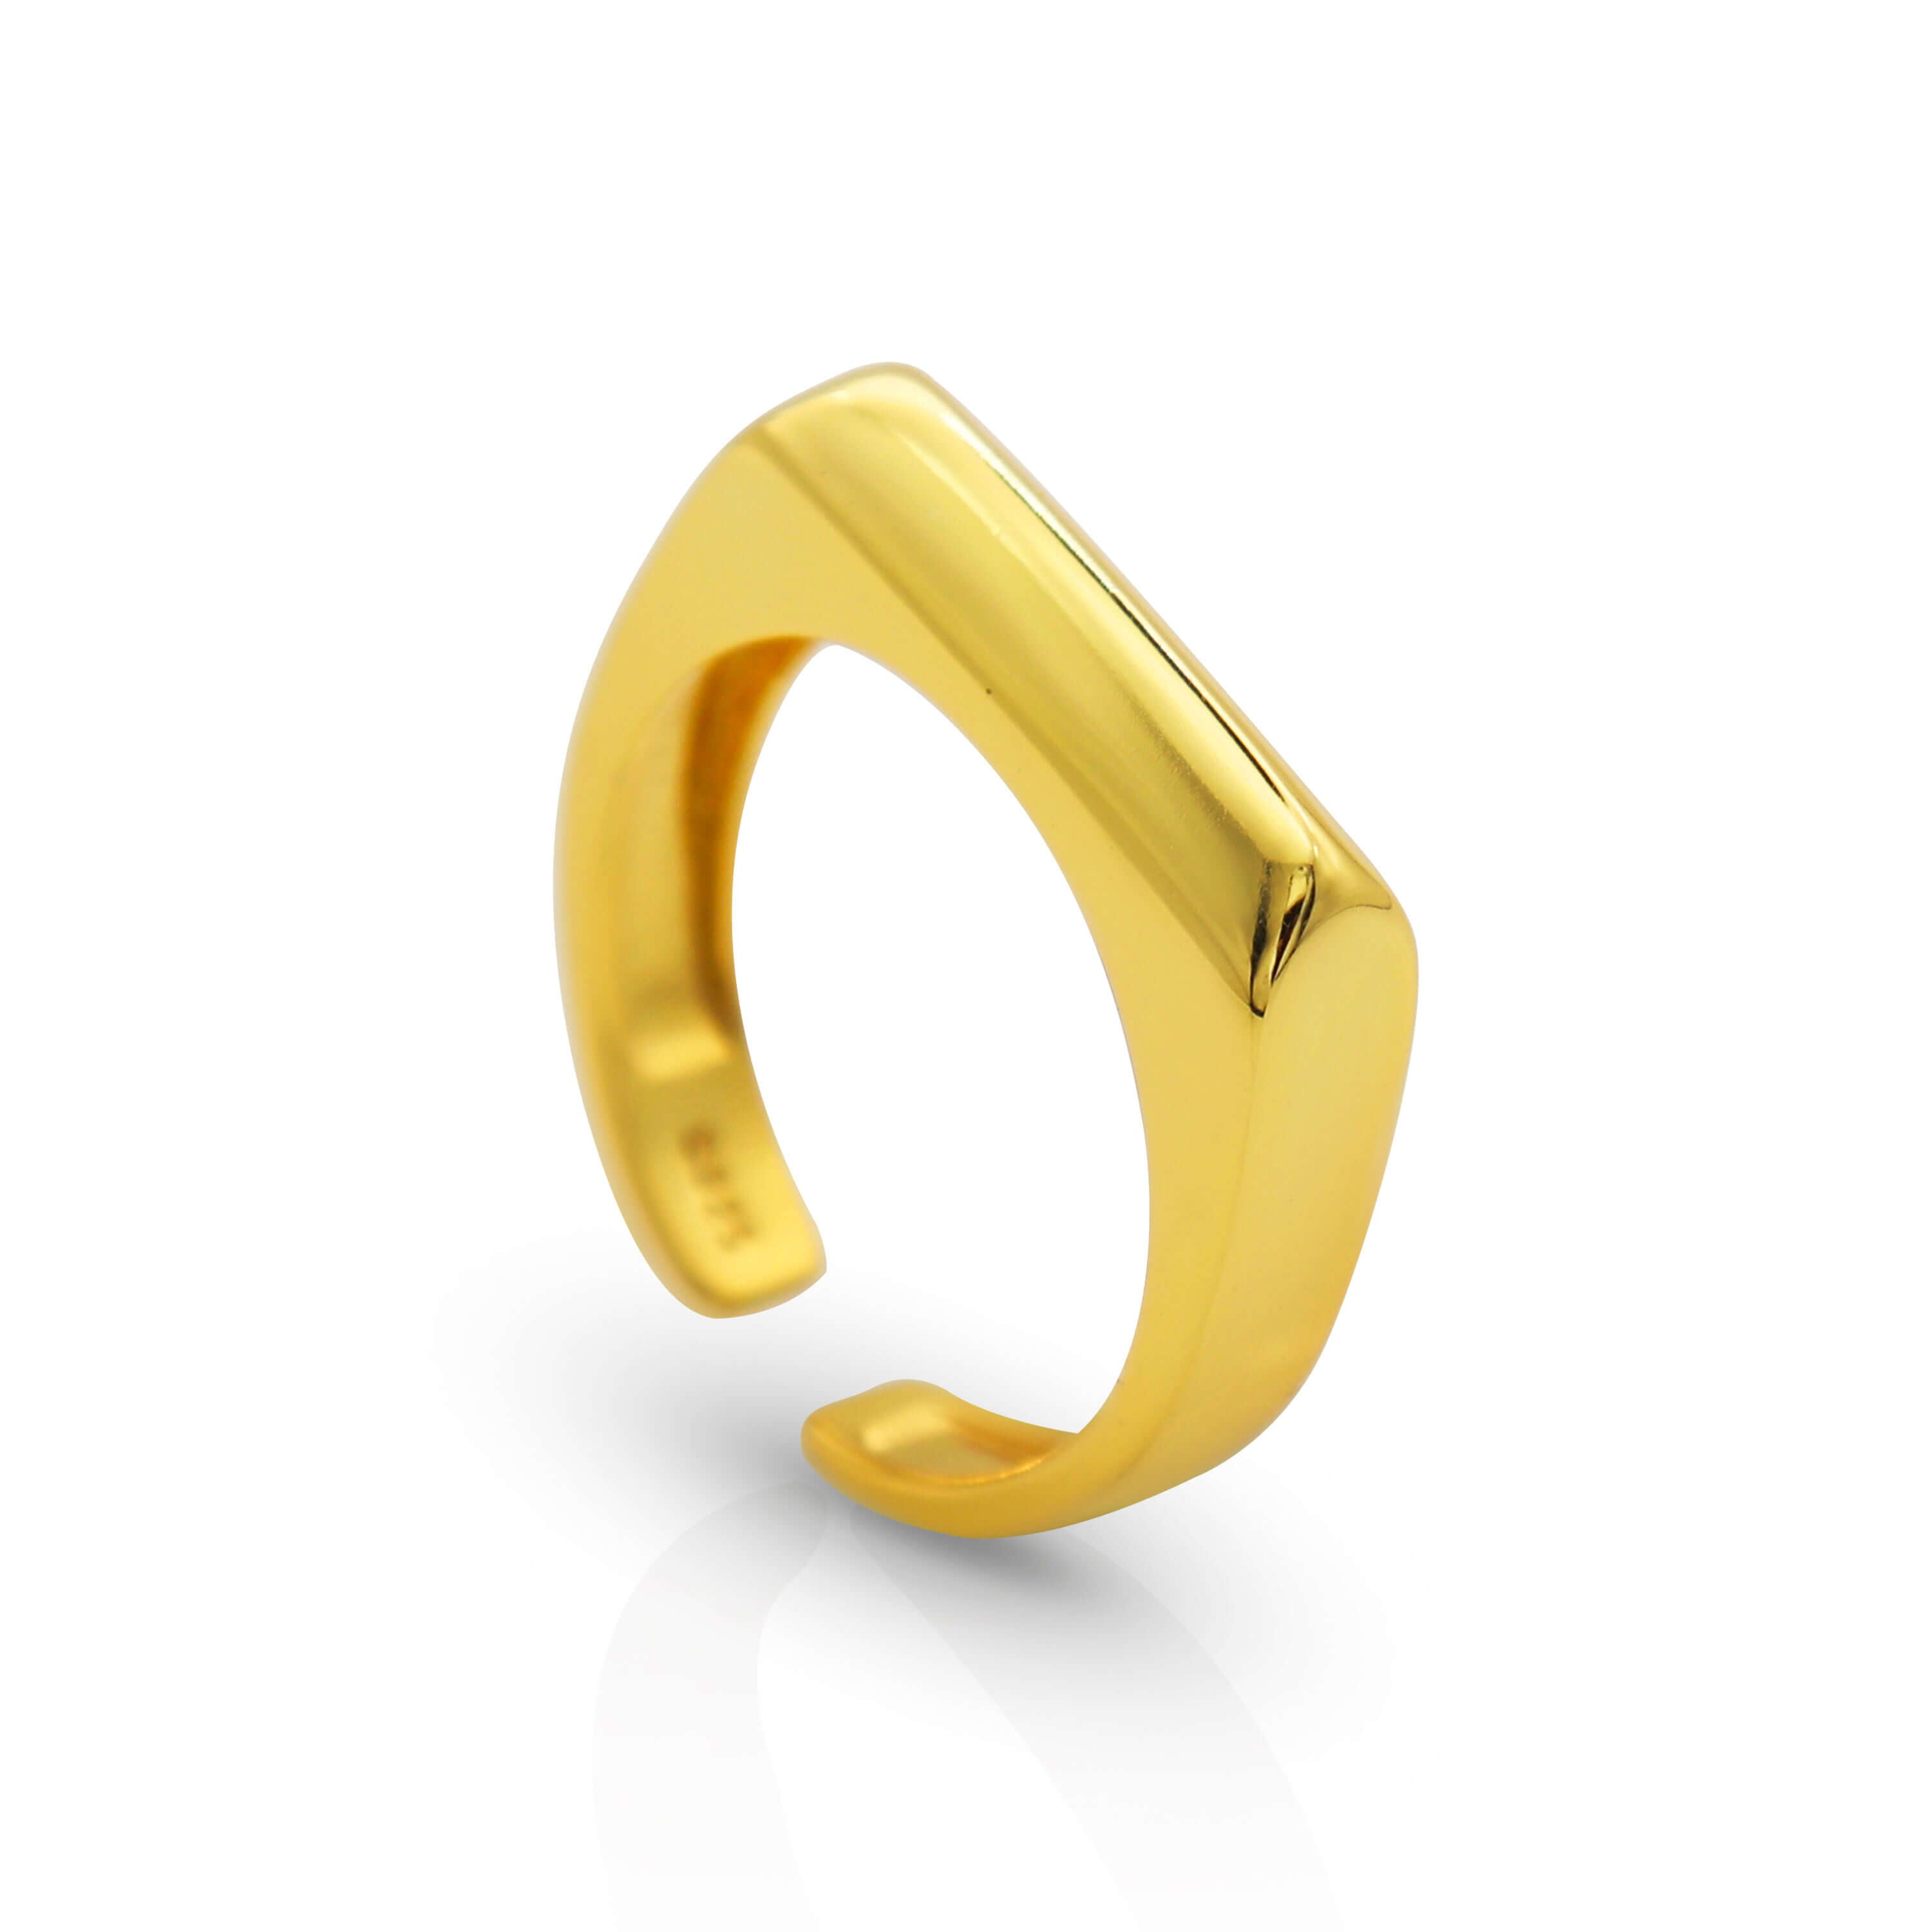 Maxim Raised Gold Bar Ring – Quia Omni